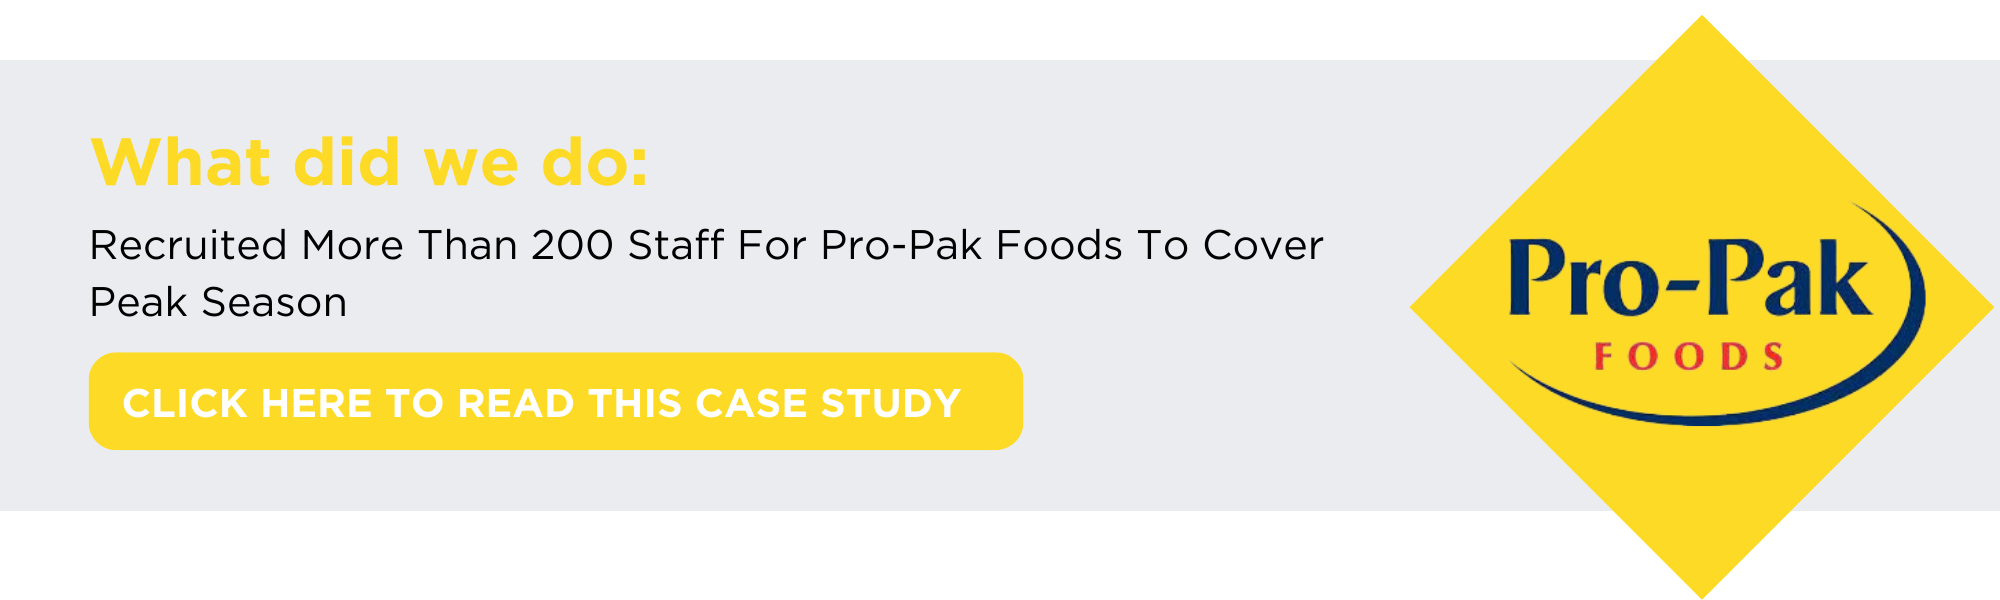 Pro-Pak Foods Case Study